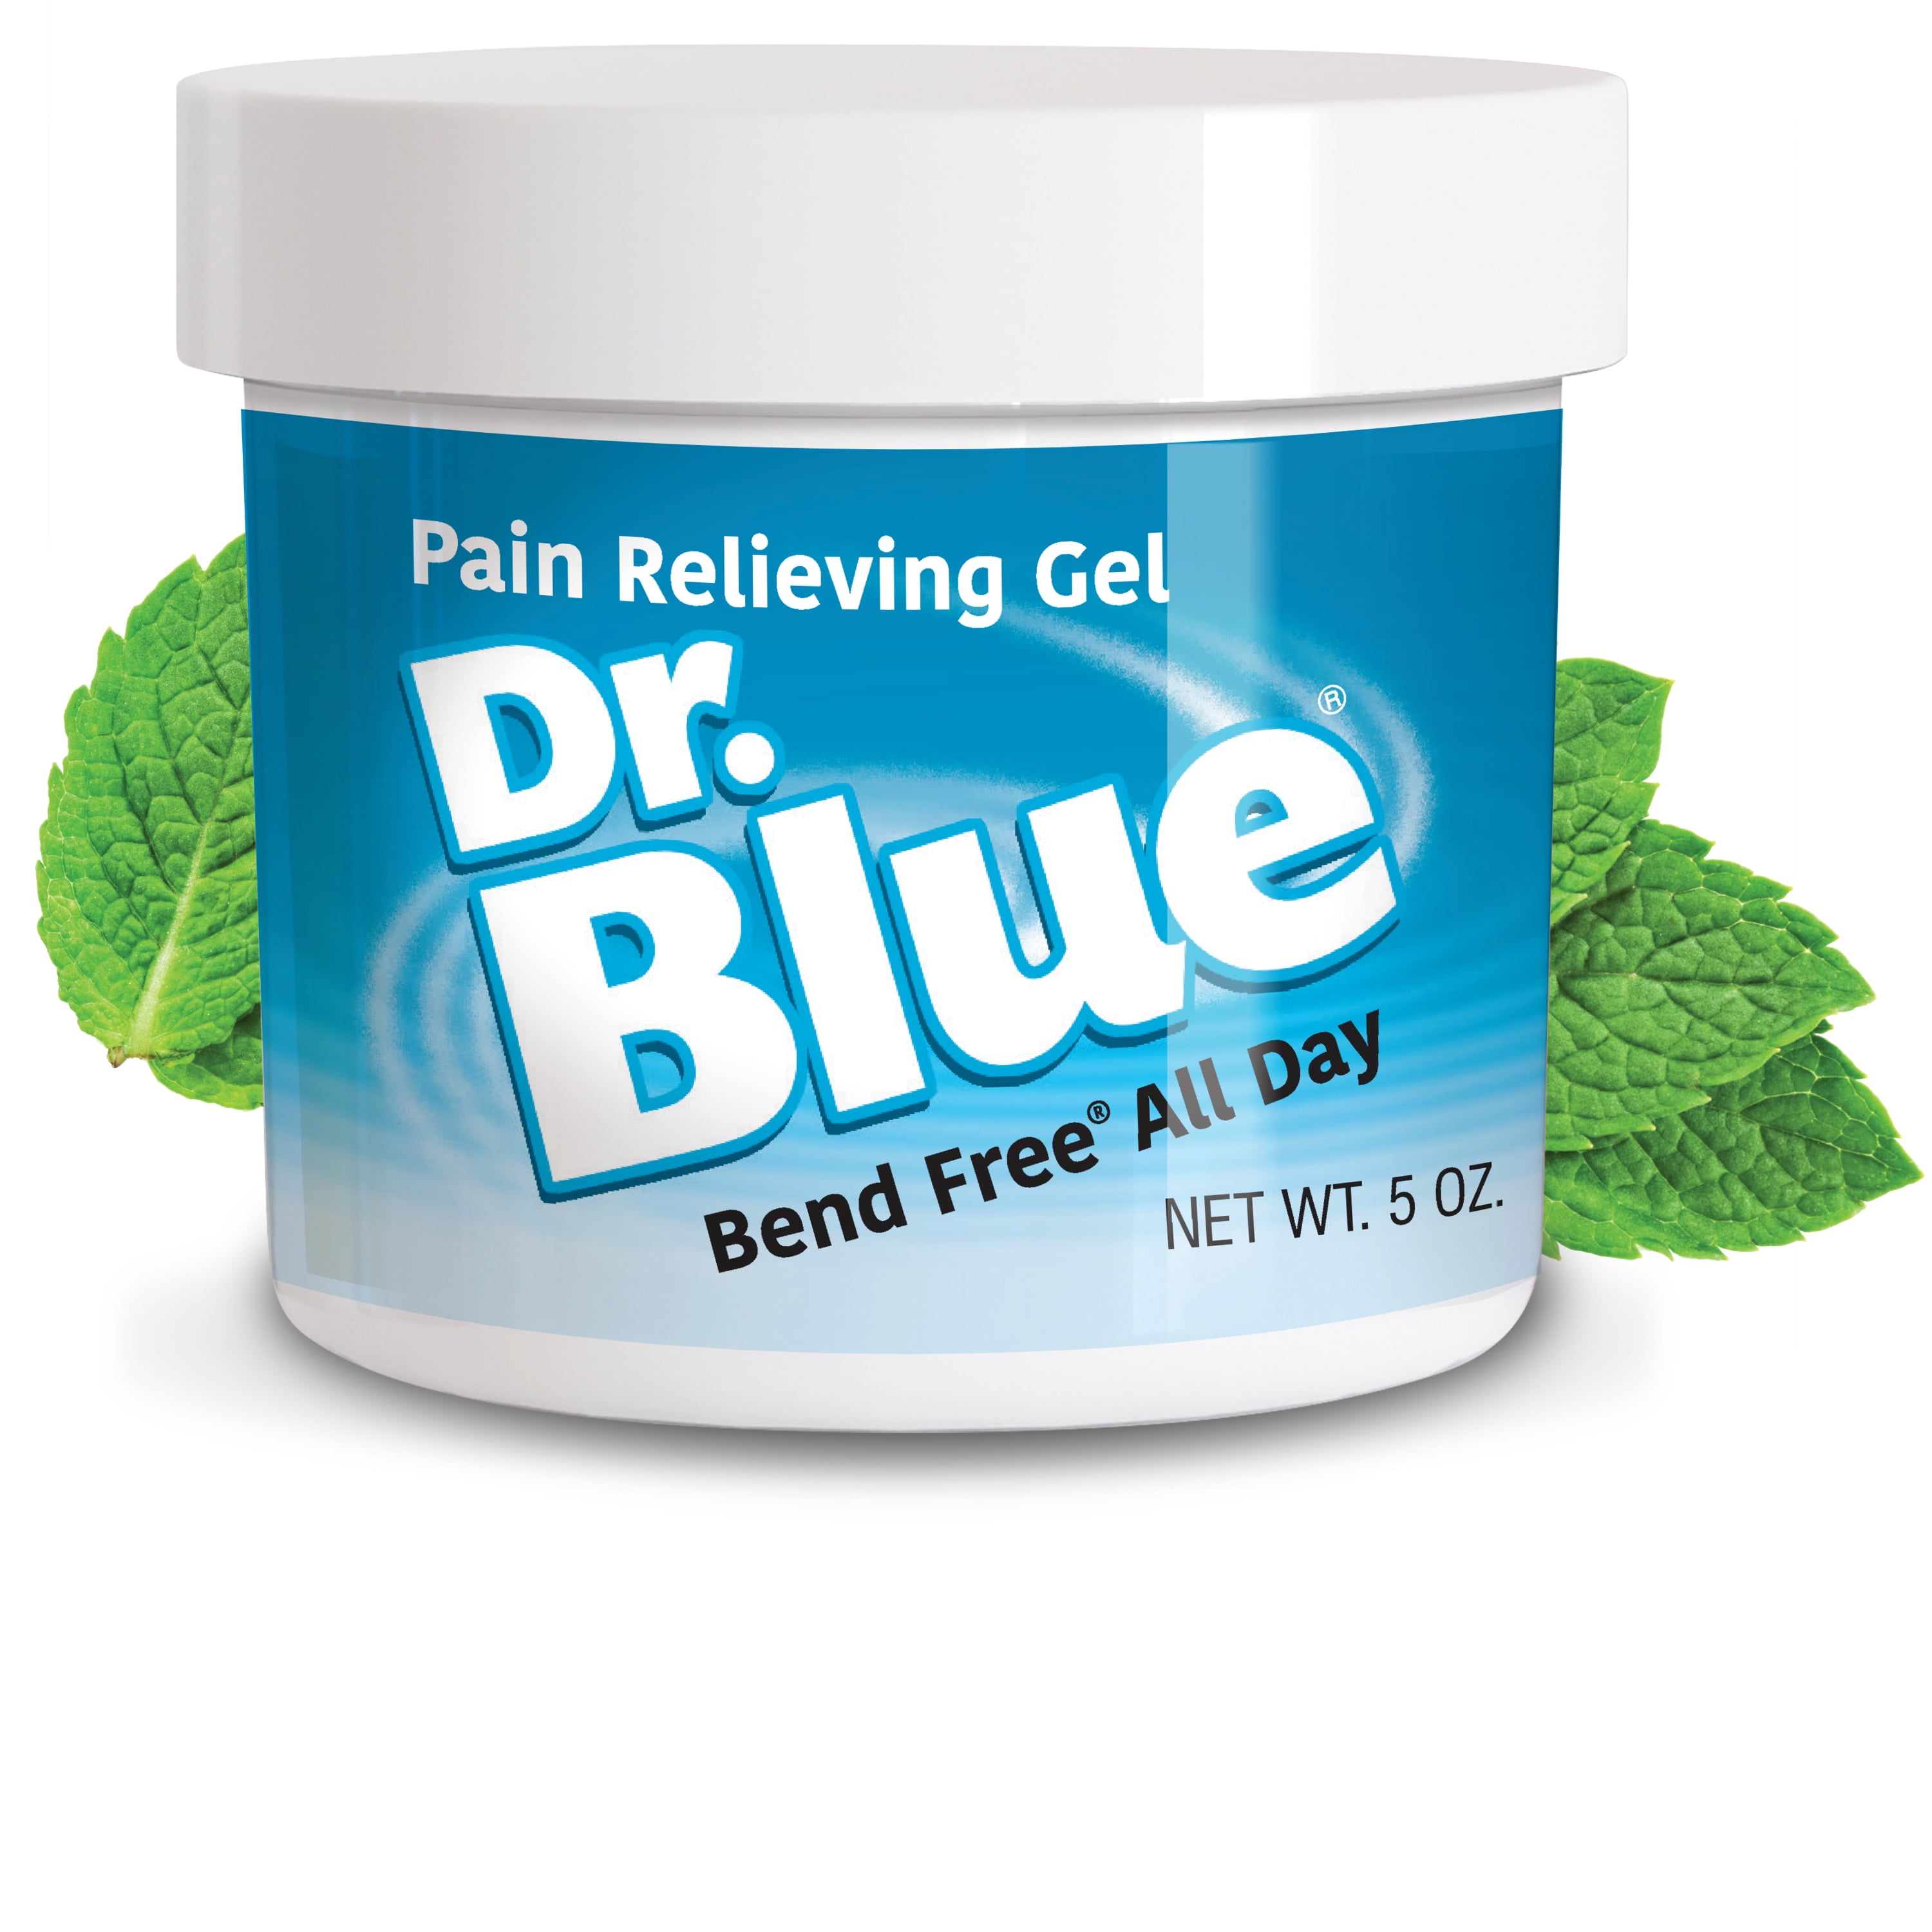 Blue-Emu Lidocaine Pain Relief Cream, OTC Lidocaine Cream, 2.7 oz 